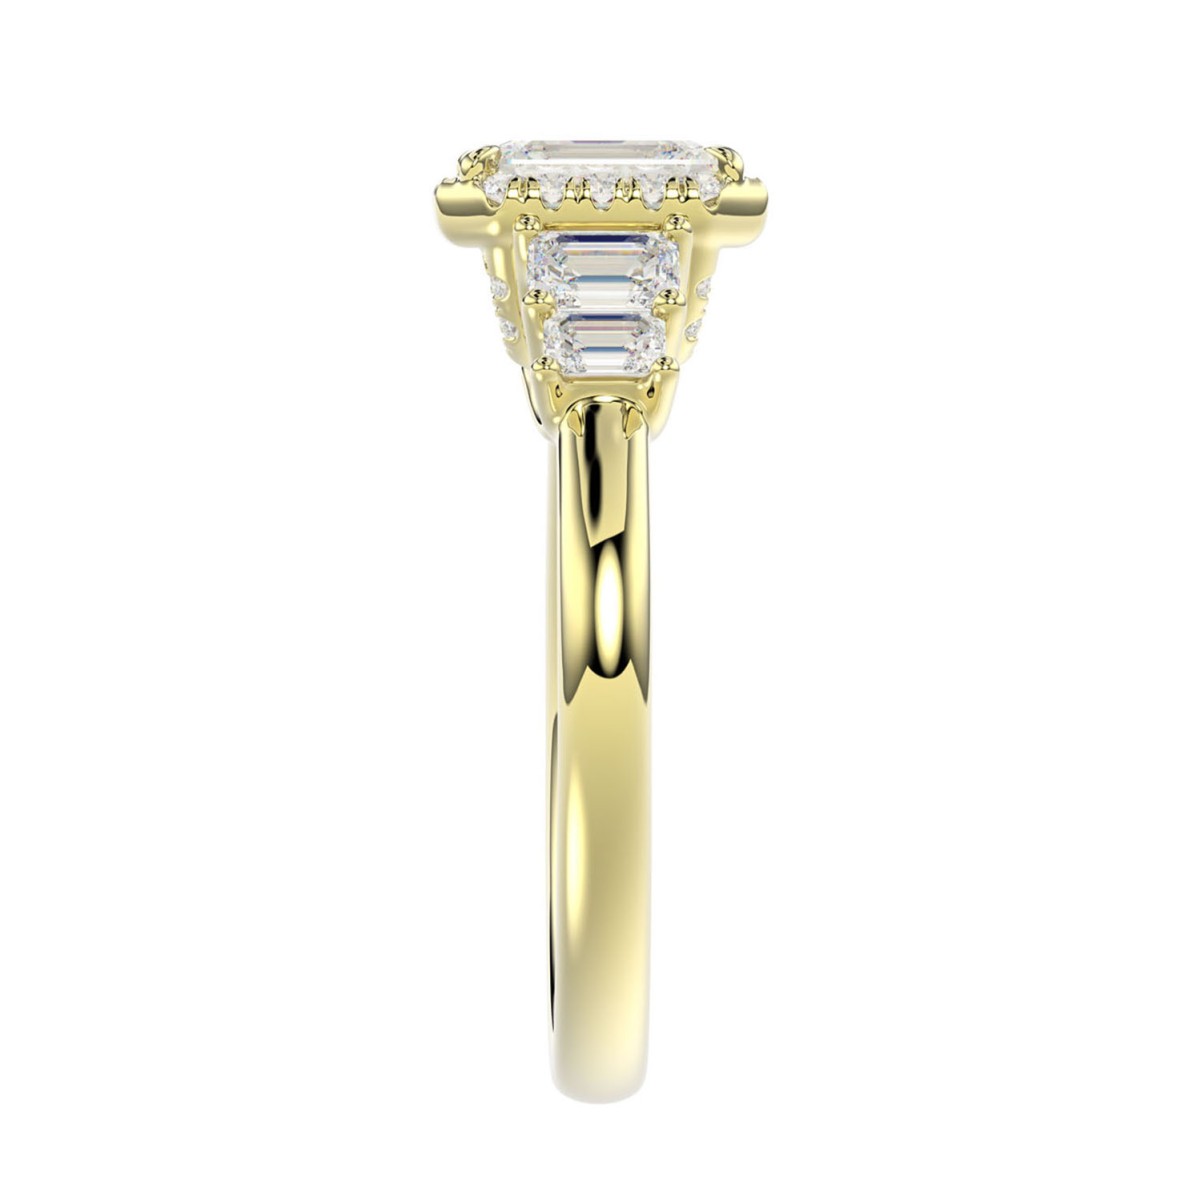 14K YELLOW GOLD 1 1/2CT ROUND/EMERALD DIAMOND LADIES RING ( CENTER STONE 3/4 CT EMERALD DIAMOND )